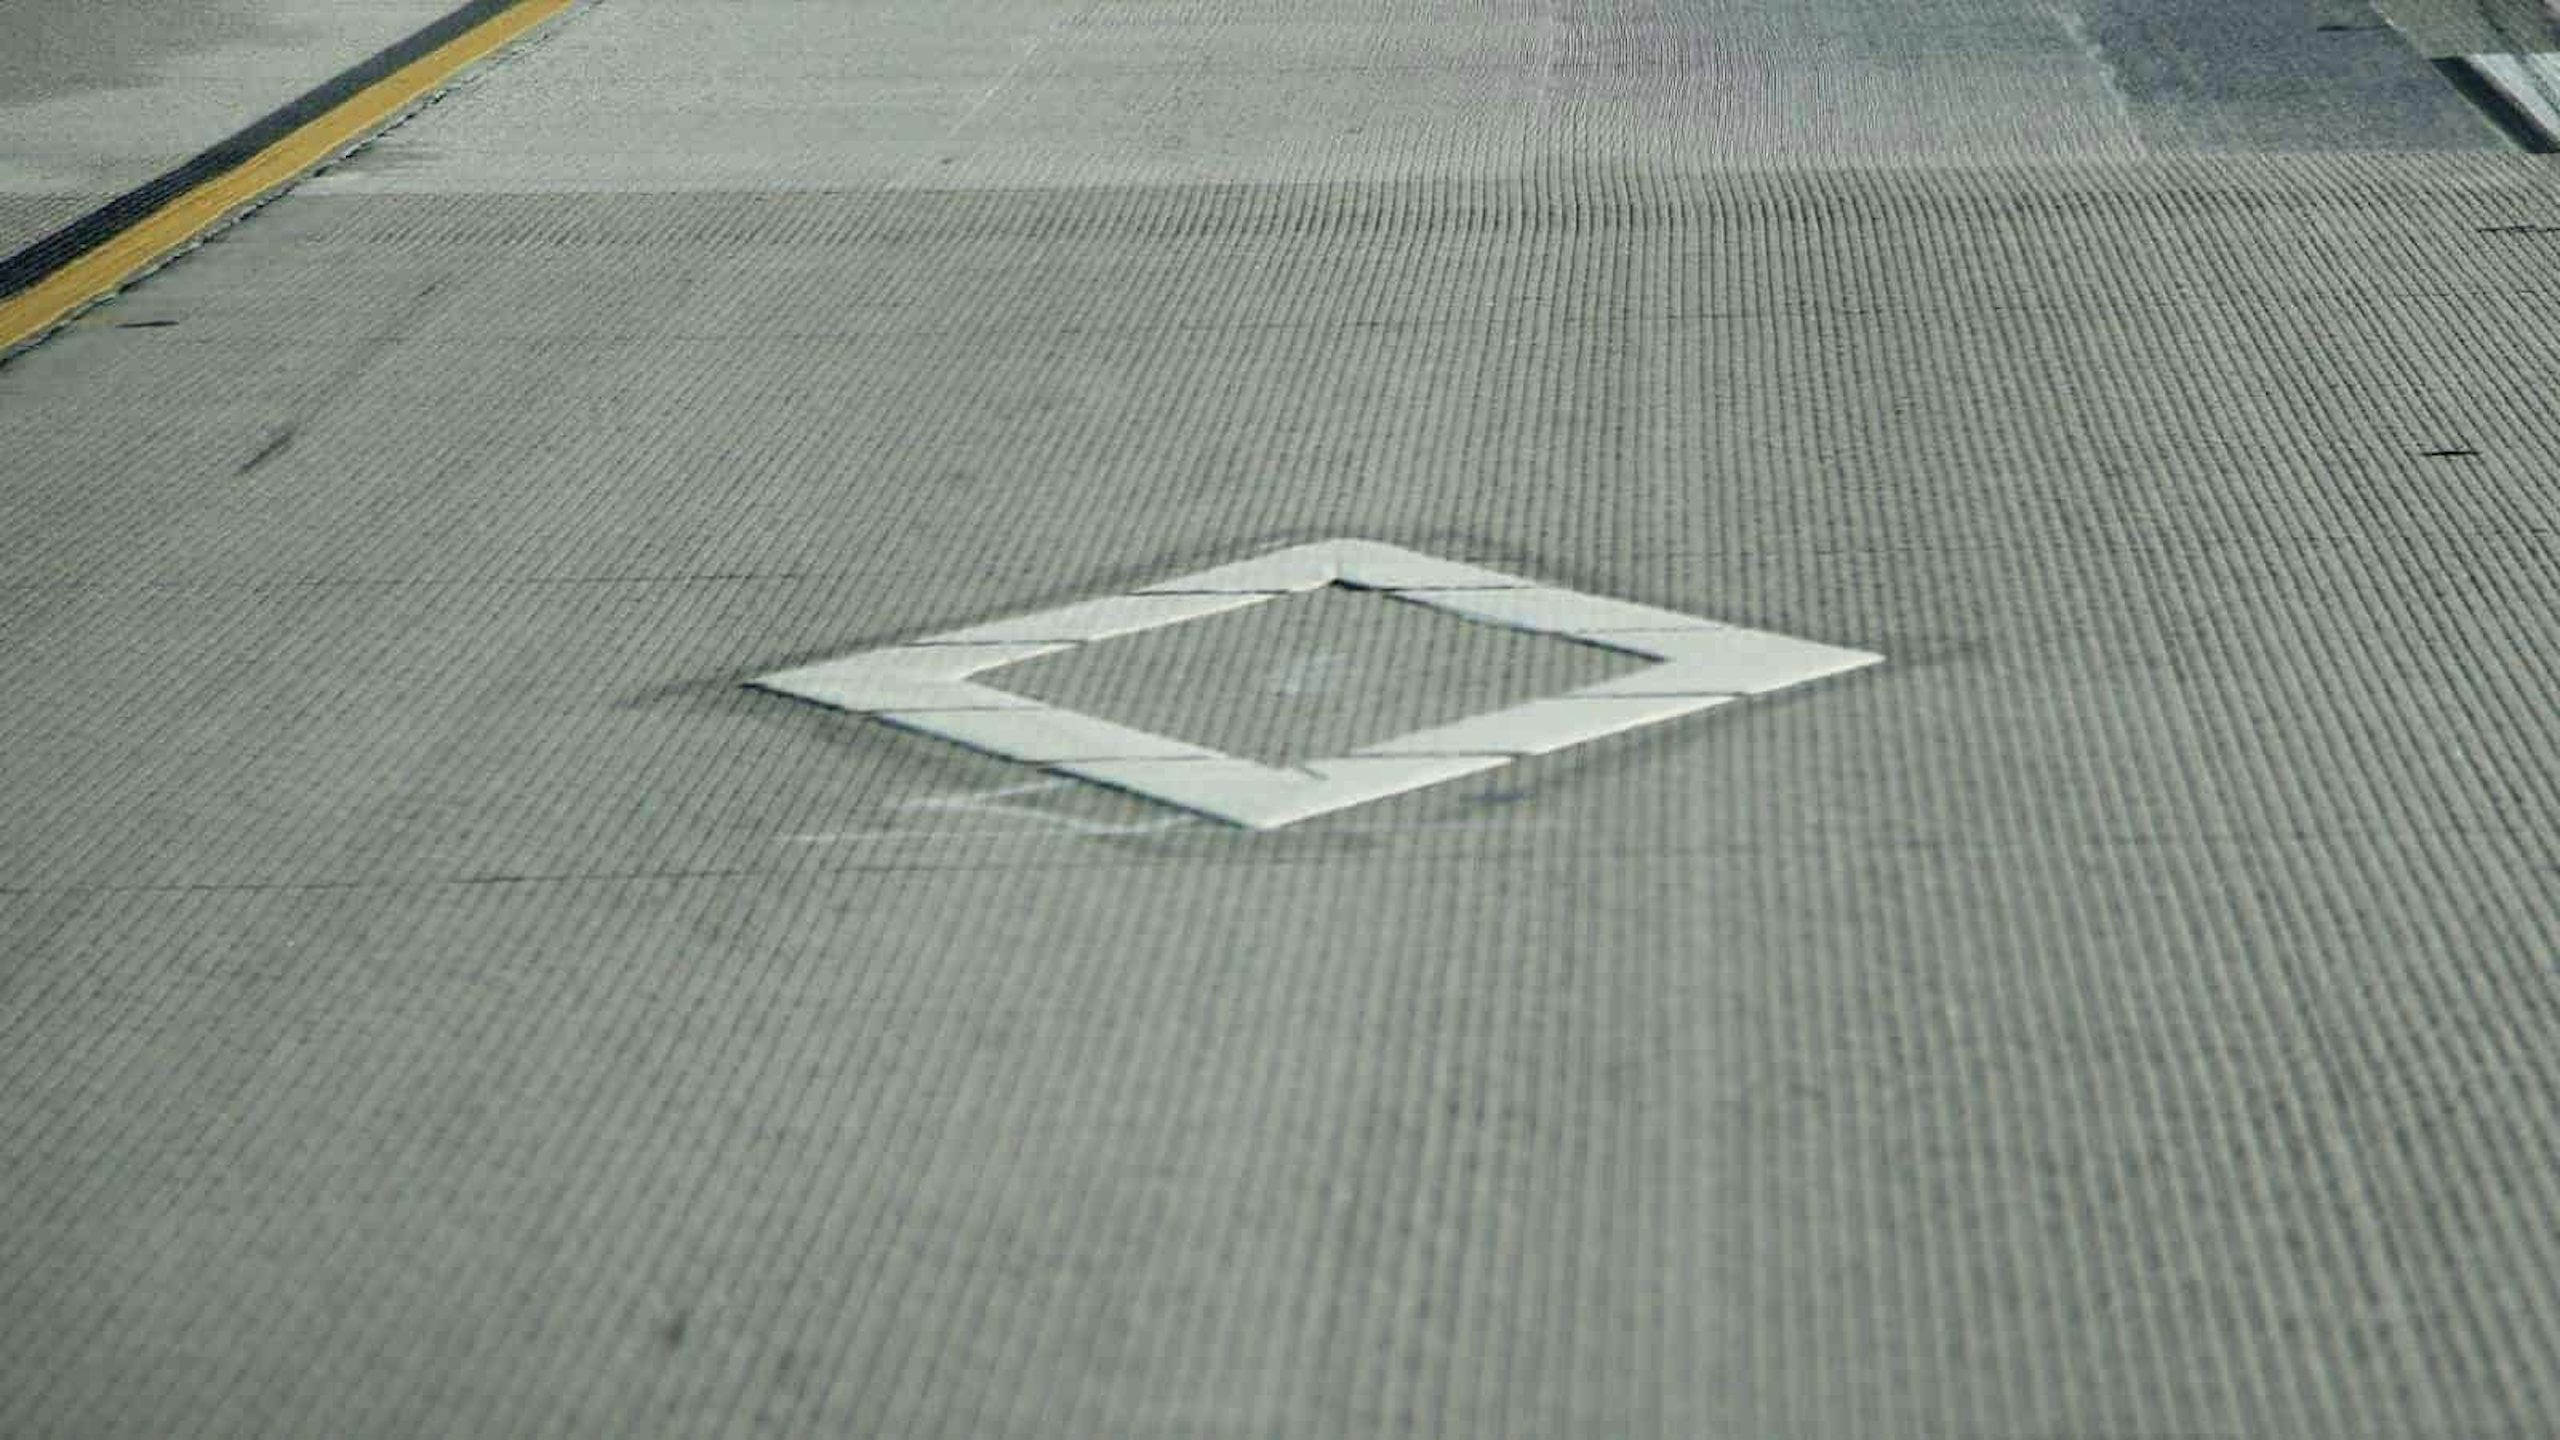 HOV lane diamond symbol road marking